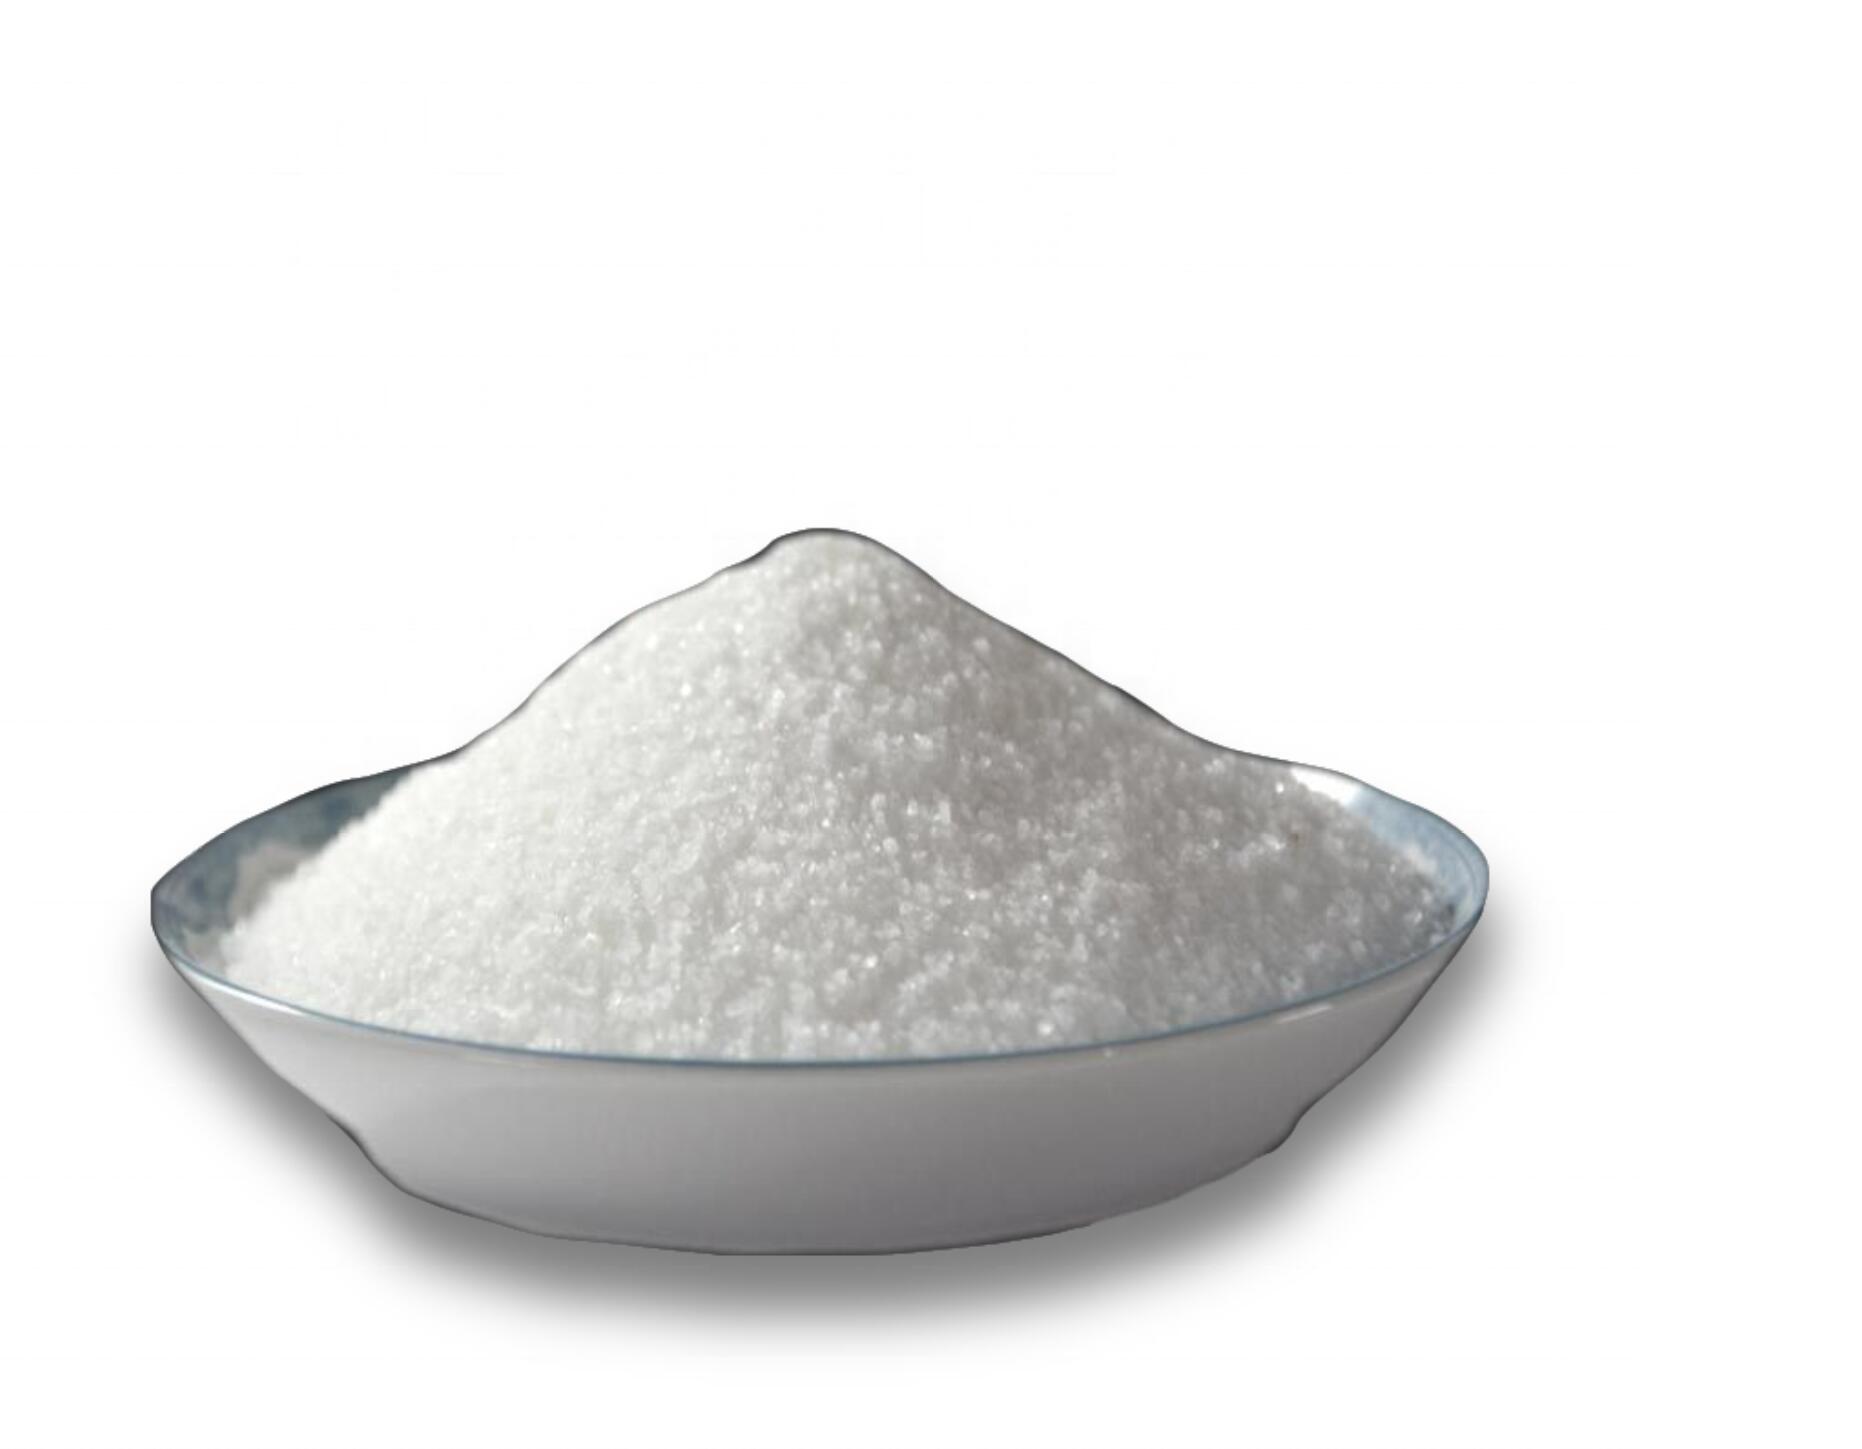 Taurous ursodeoxycholic acid Cas14605-22-2 Supplier 